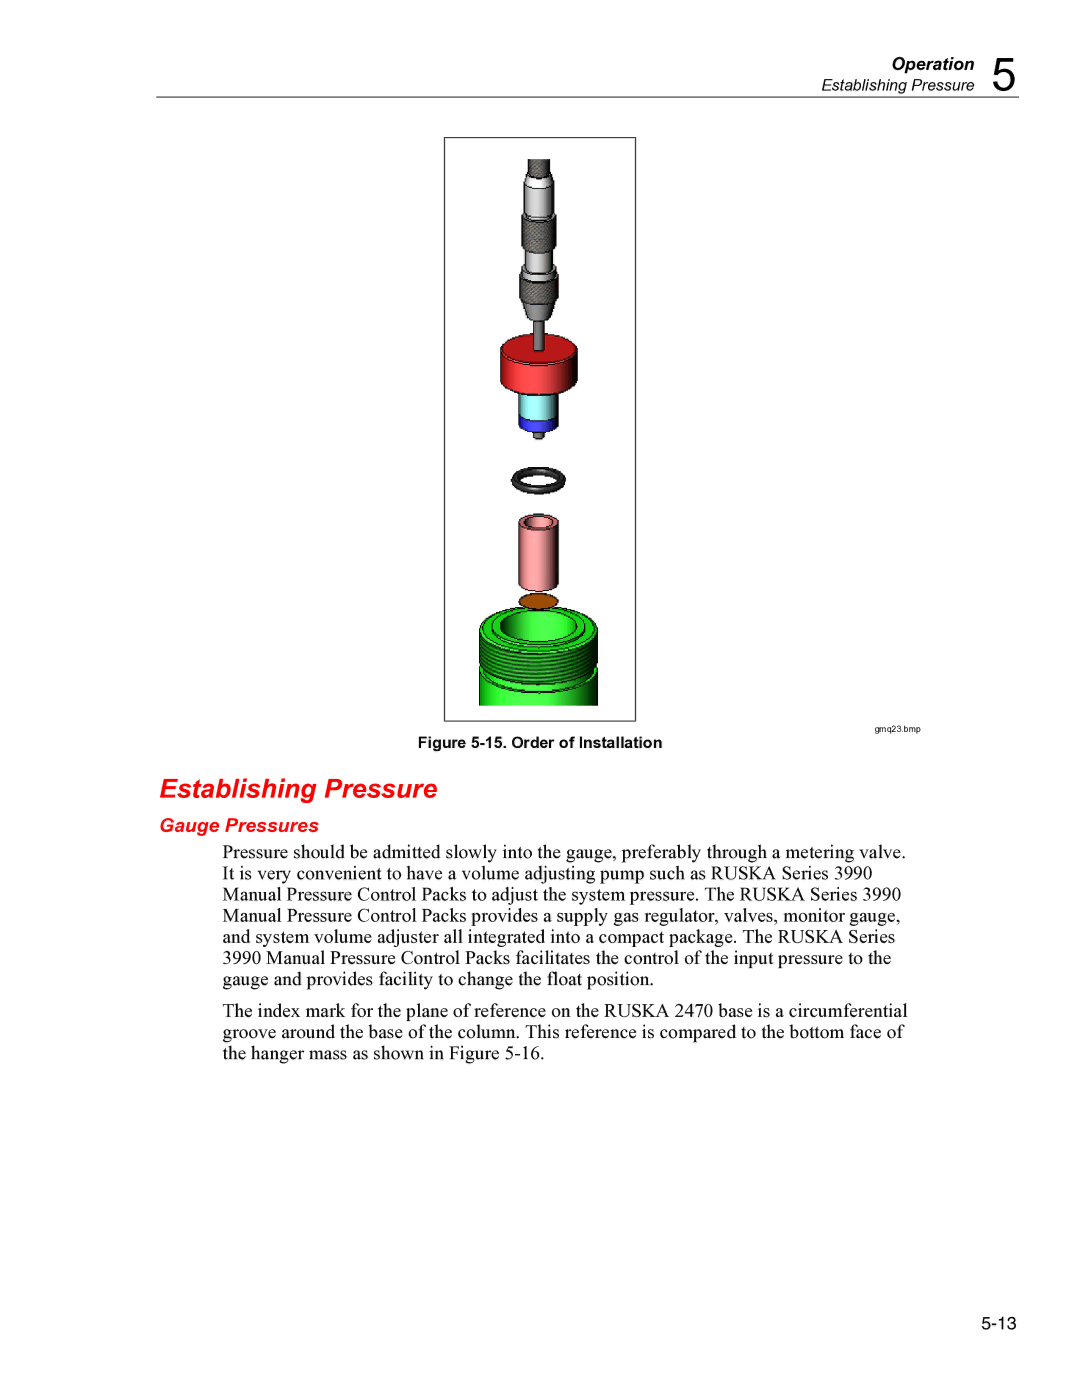 Fluke 2470 specifications Establishing Pressure, Gauge Pressures 